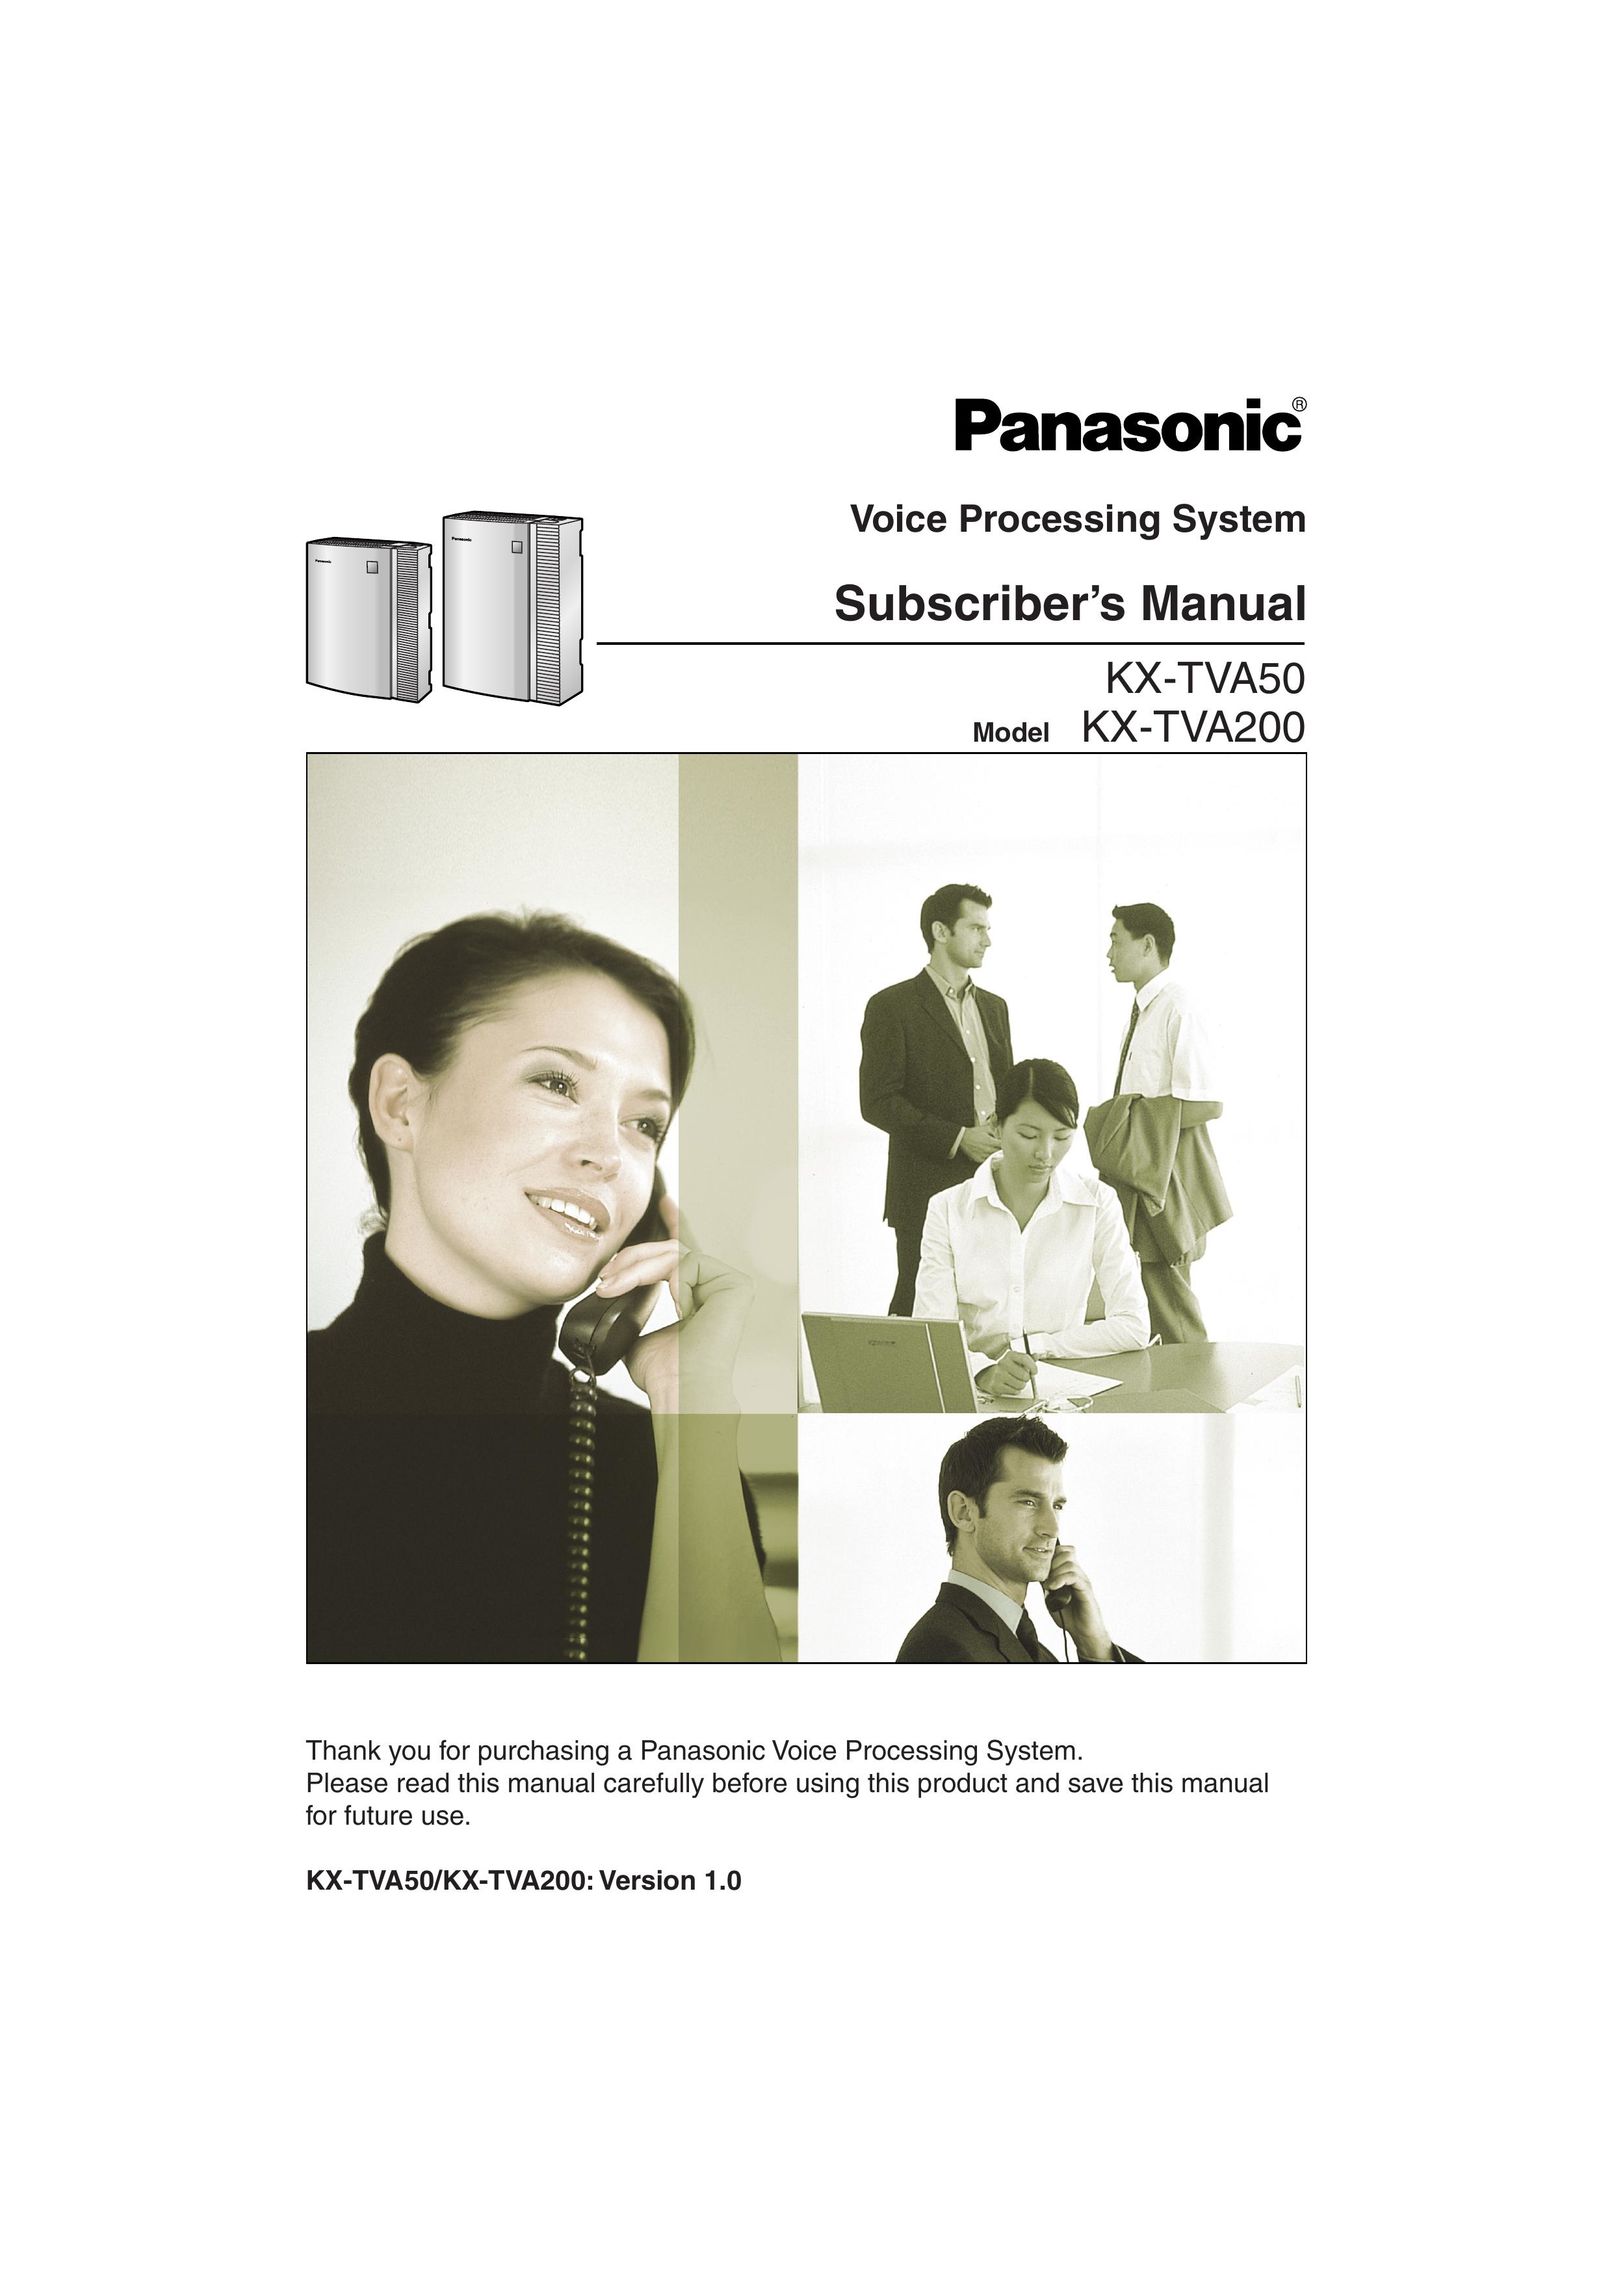 Panasonic kktva200 IP Phone User Manual